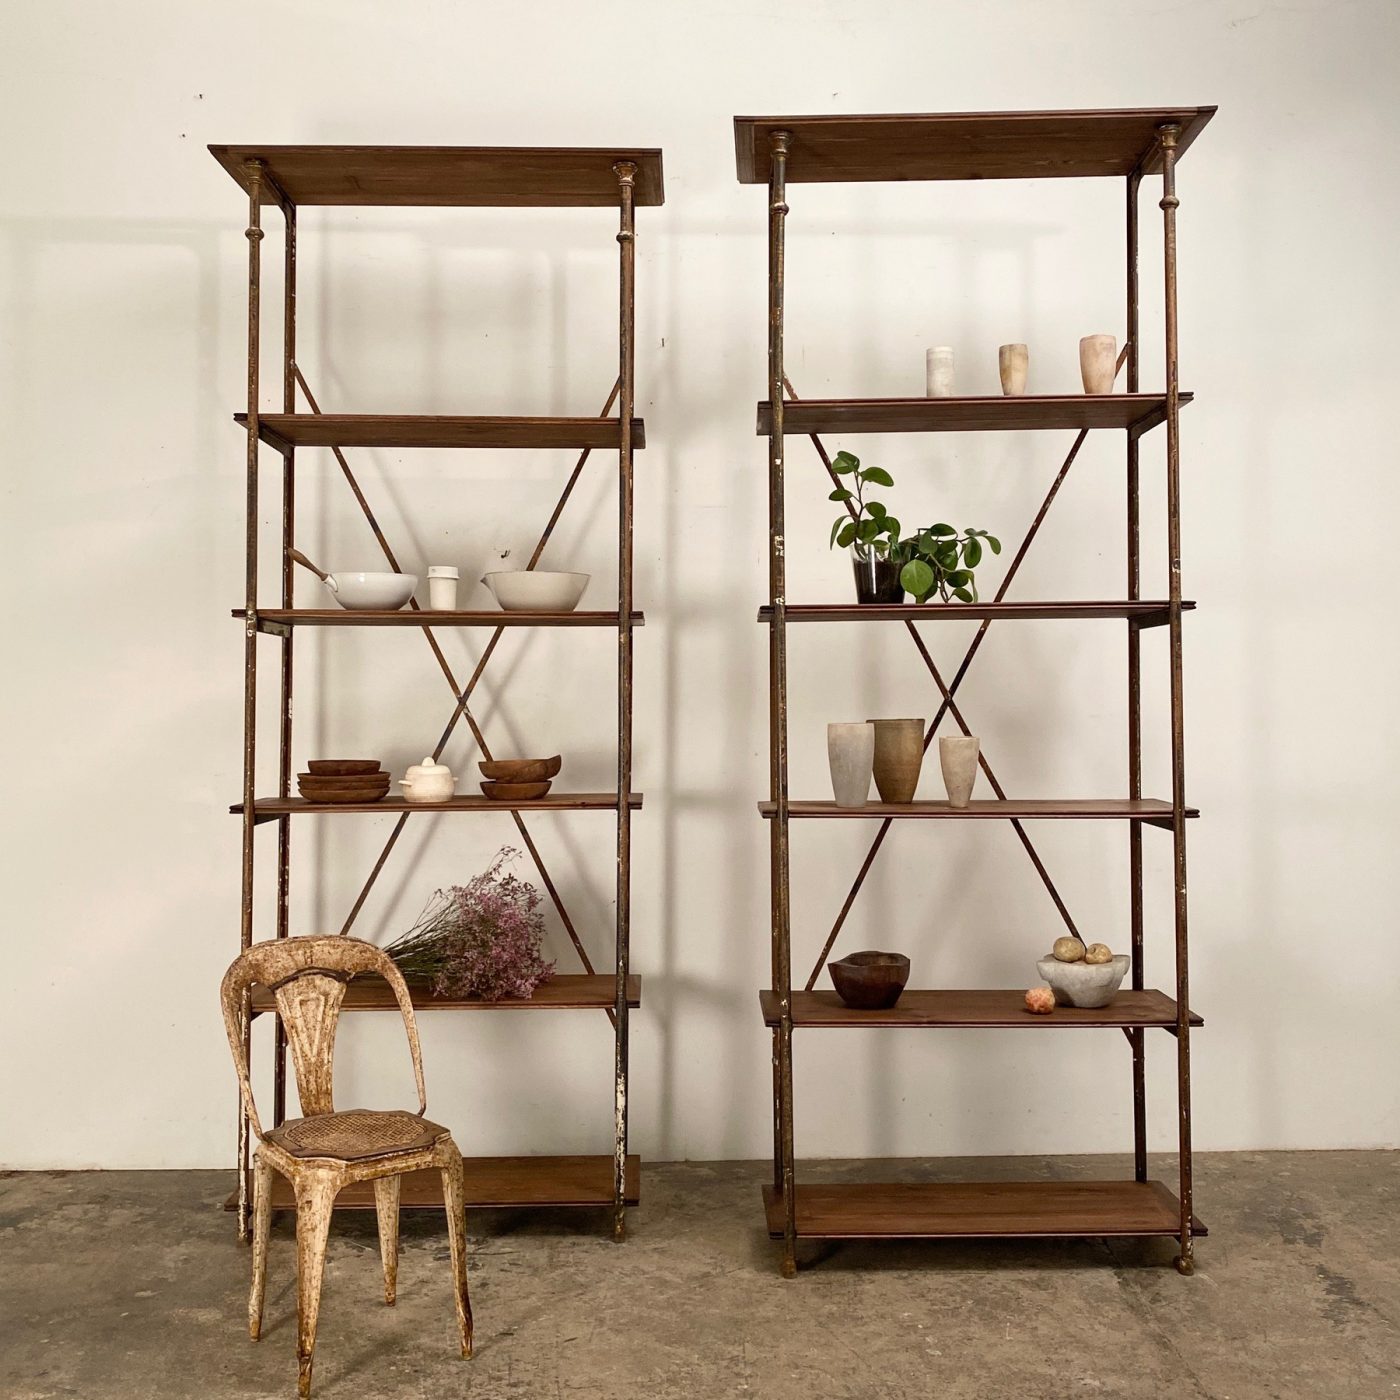 objet-vagabond-industrial-shelves0007